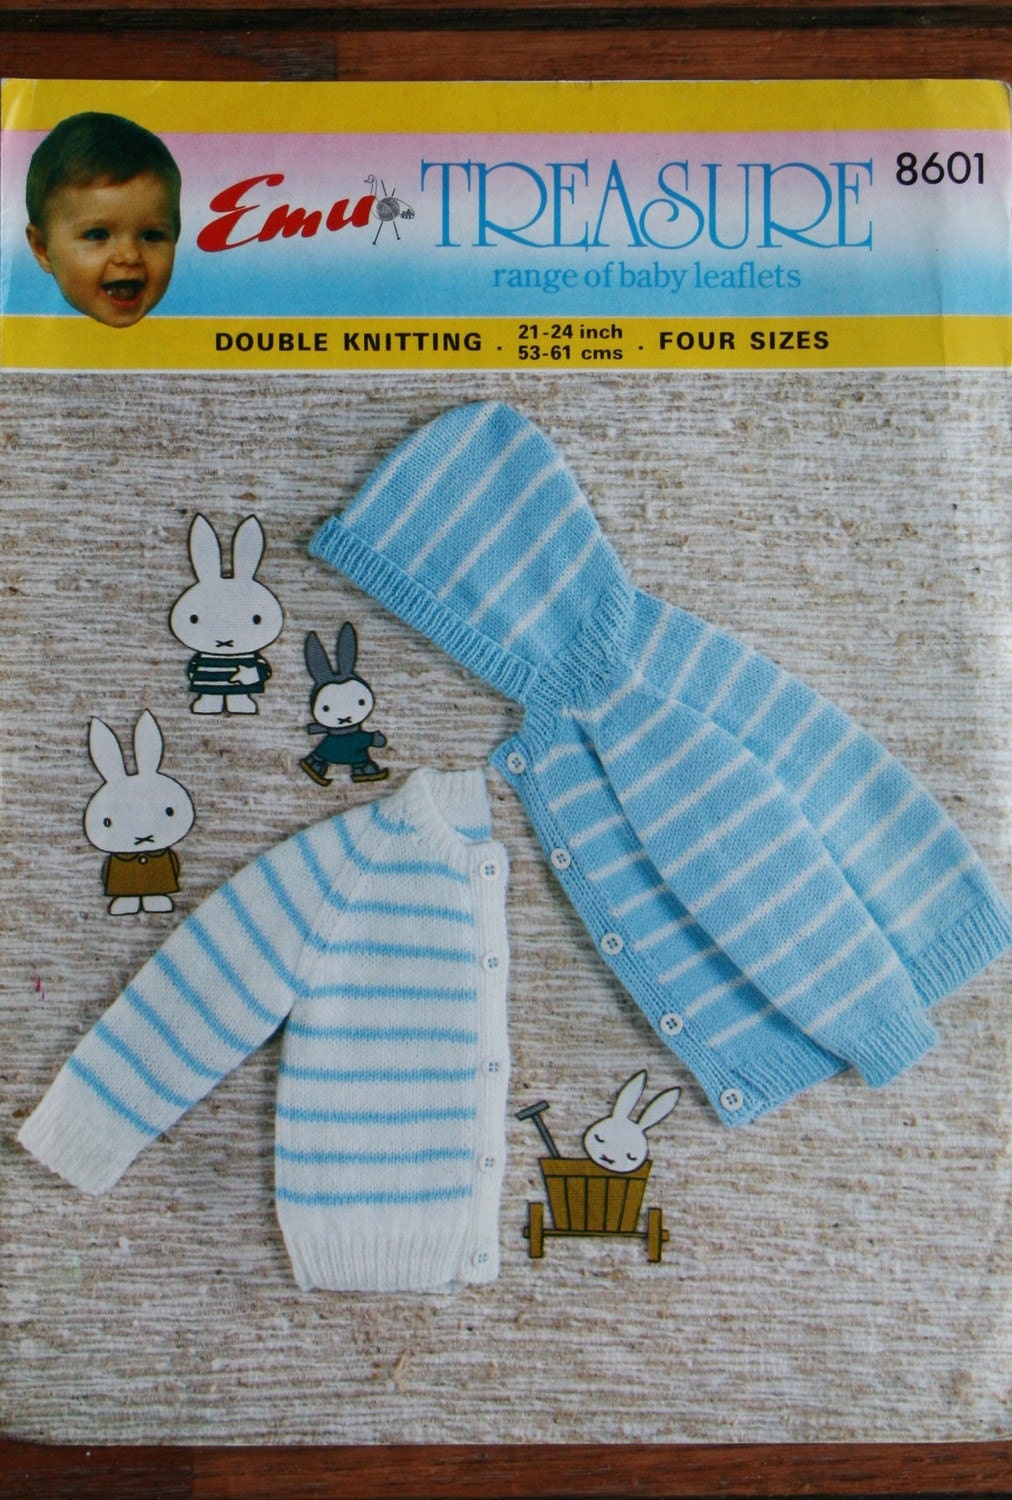 knit cardigan pattern | eBay - Electronics, Cars, Fashio
n